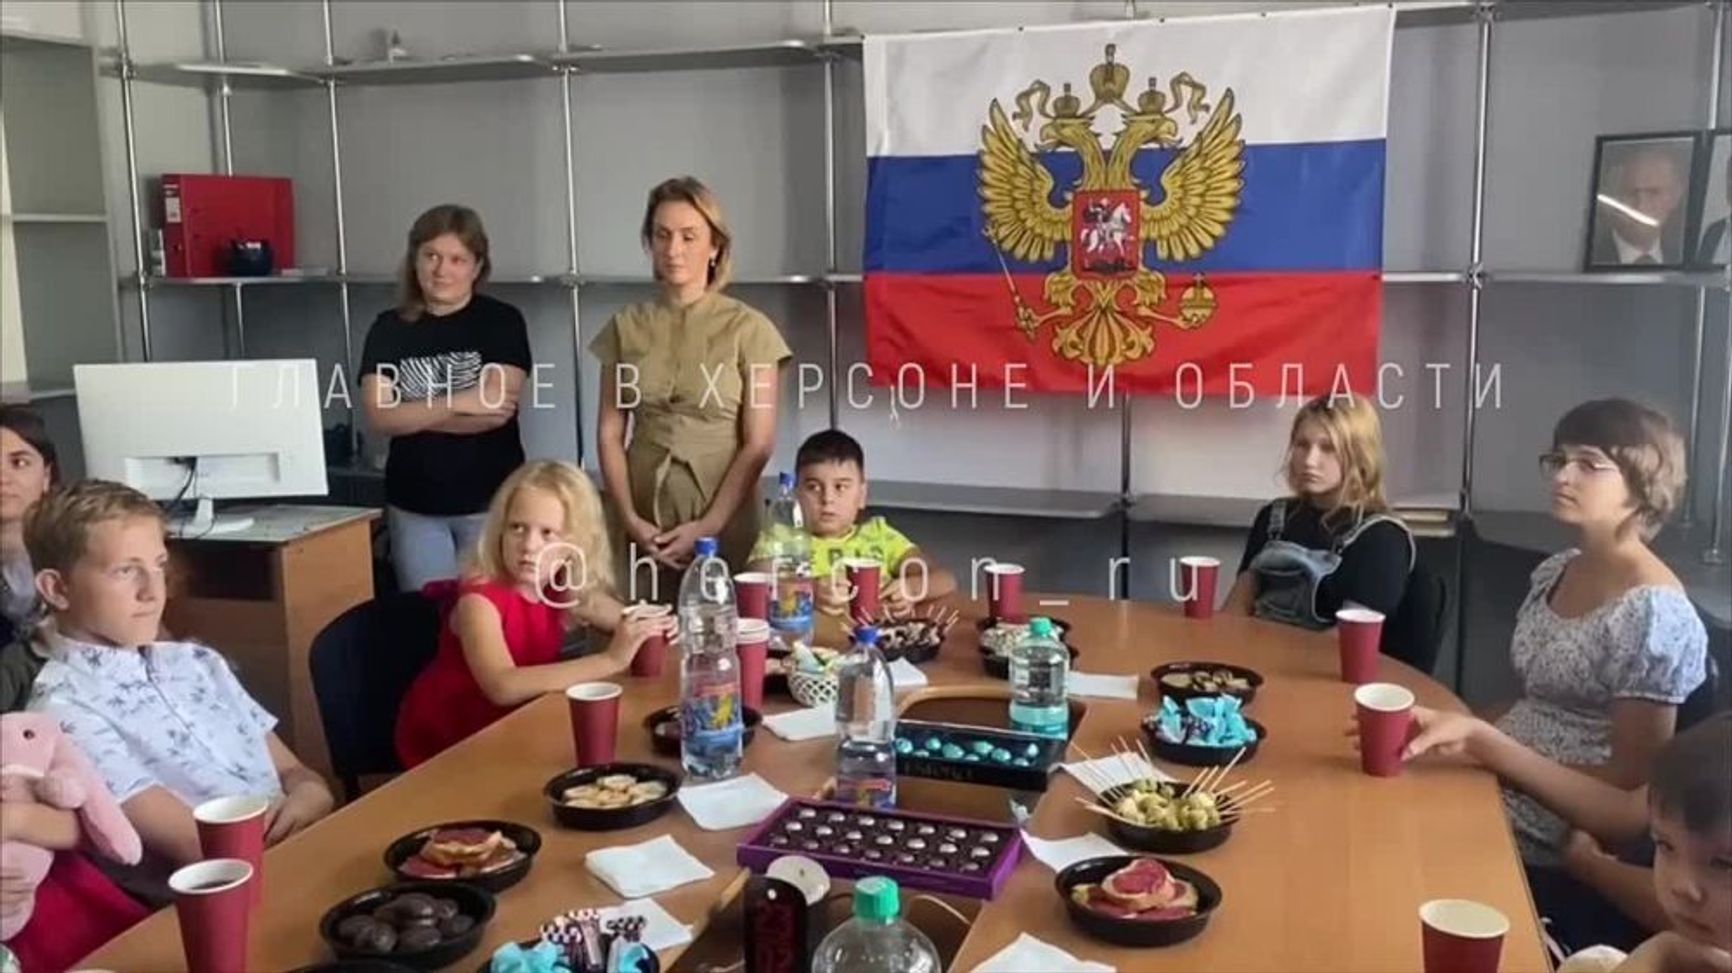 Russia's Children's Rights Commissioner Maria Lvova-Belova in the occupied Kherson Region